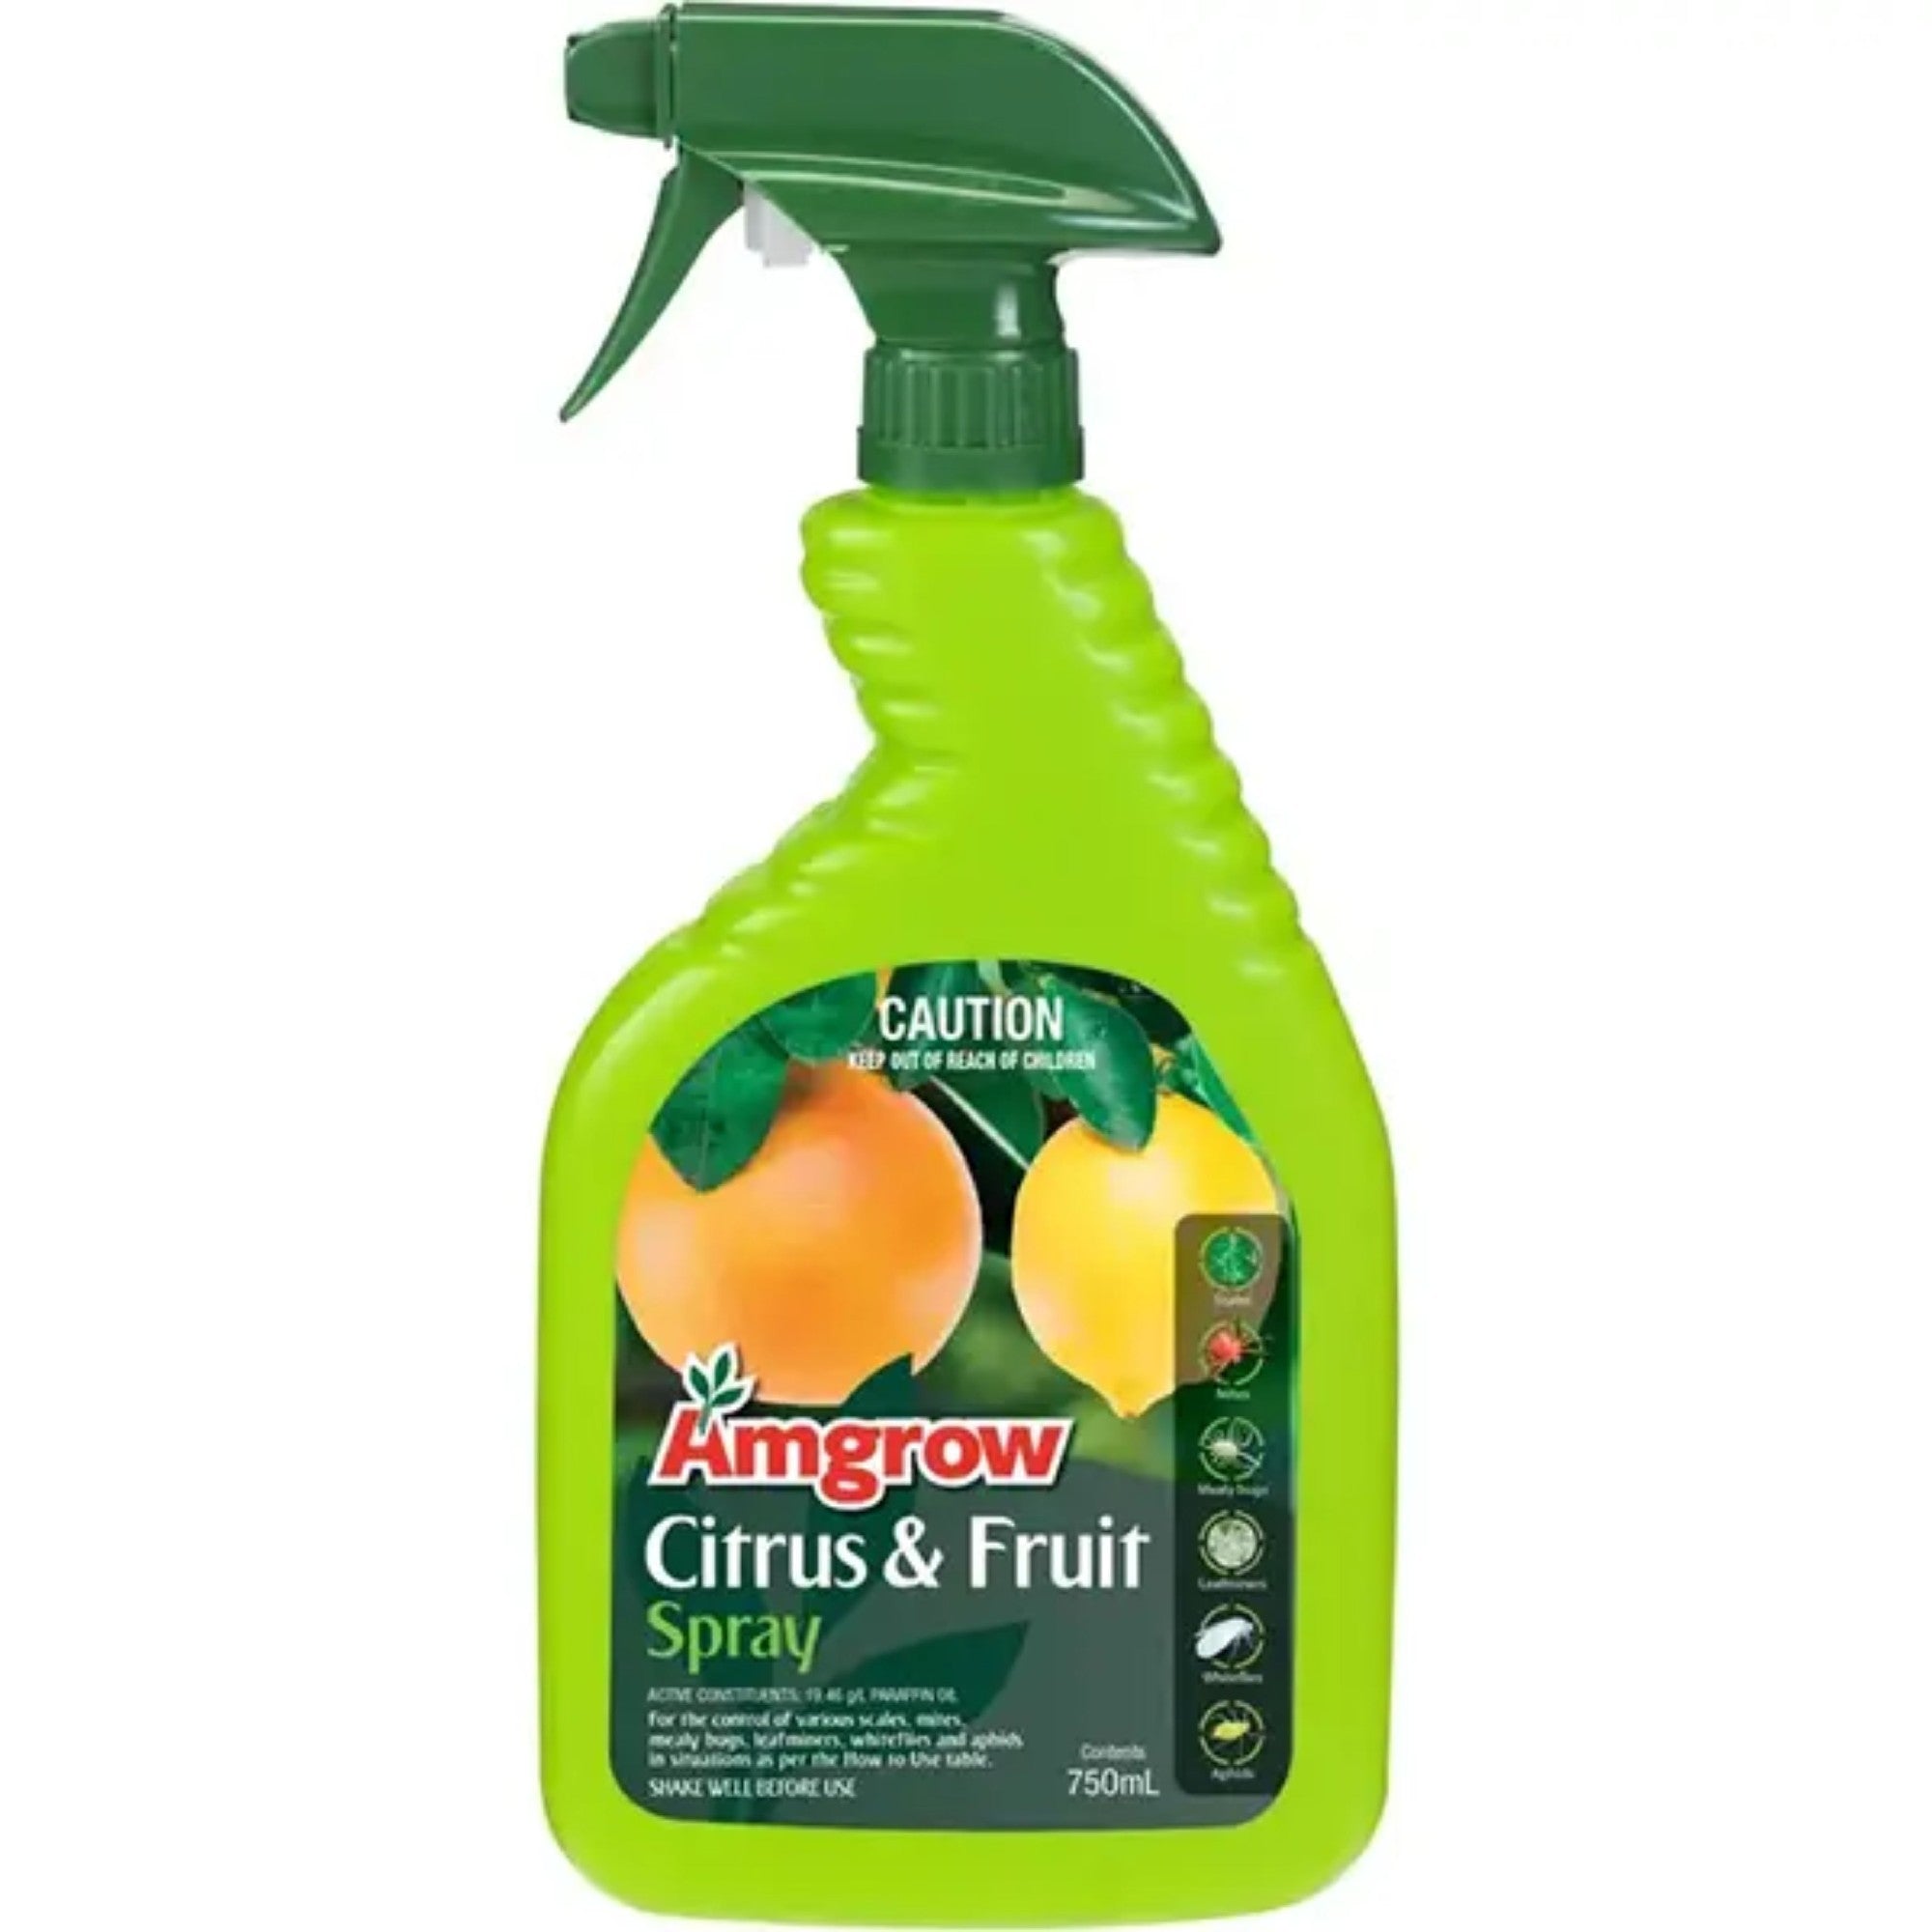 Citrus & Fruit Spray Rtu 750ml